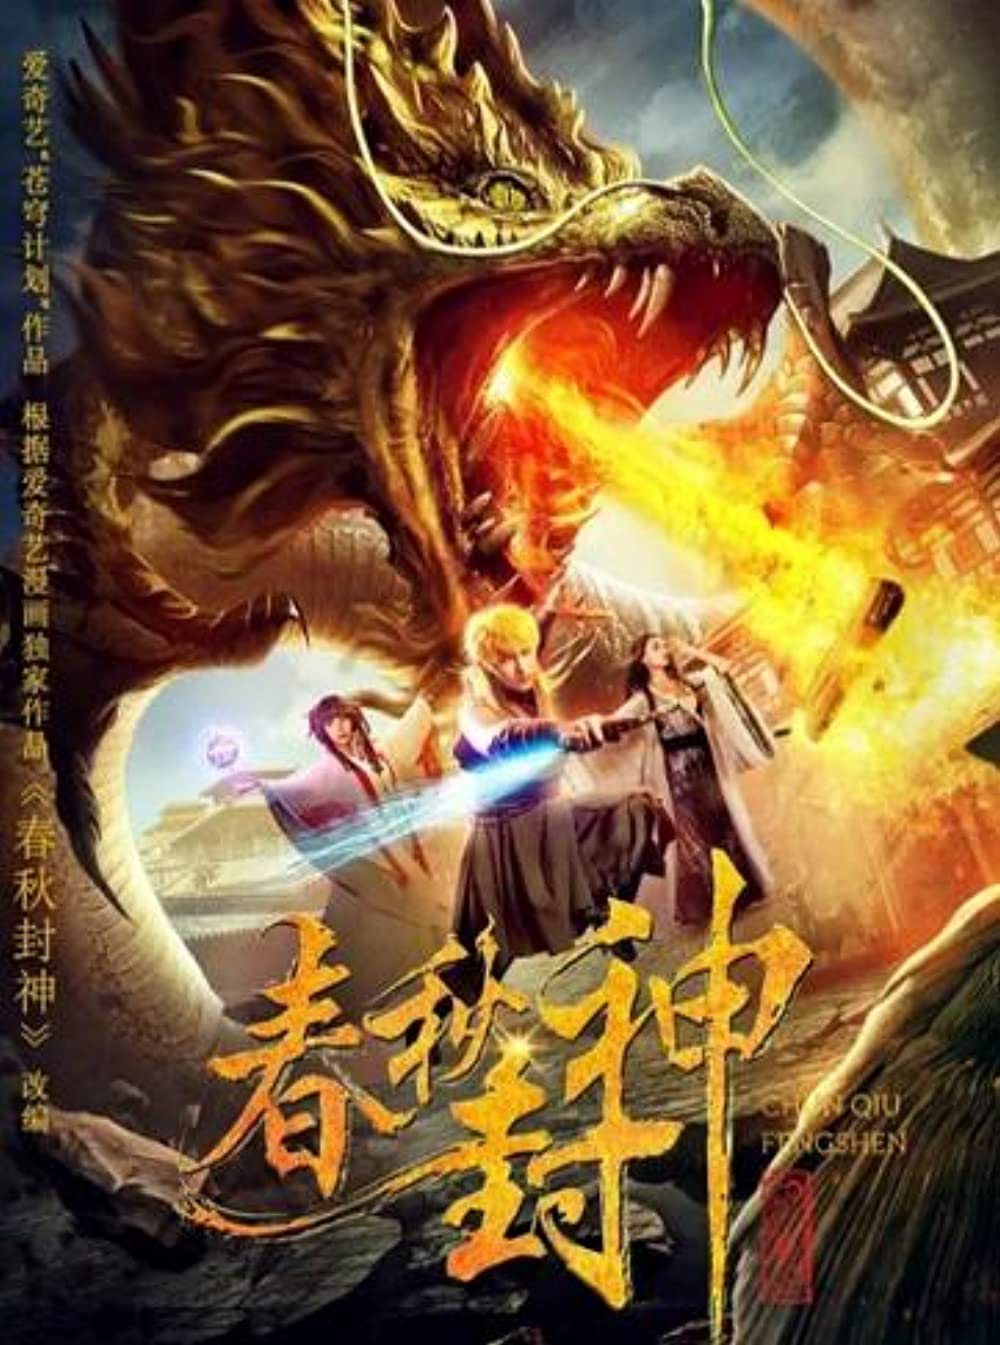 Poster Phim Xuân Thu Phong Thần (Chun Qiu Fengshen)